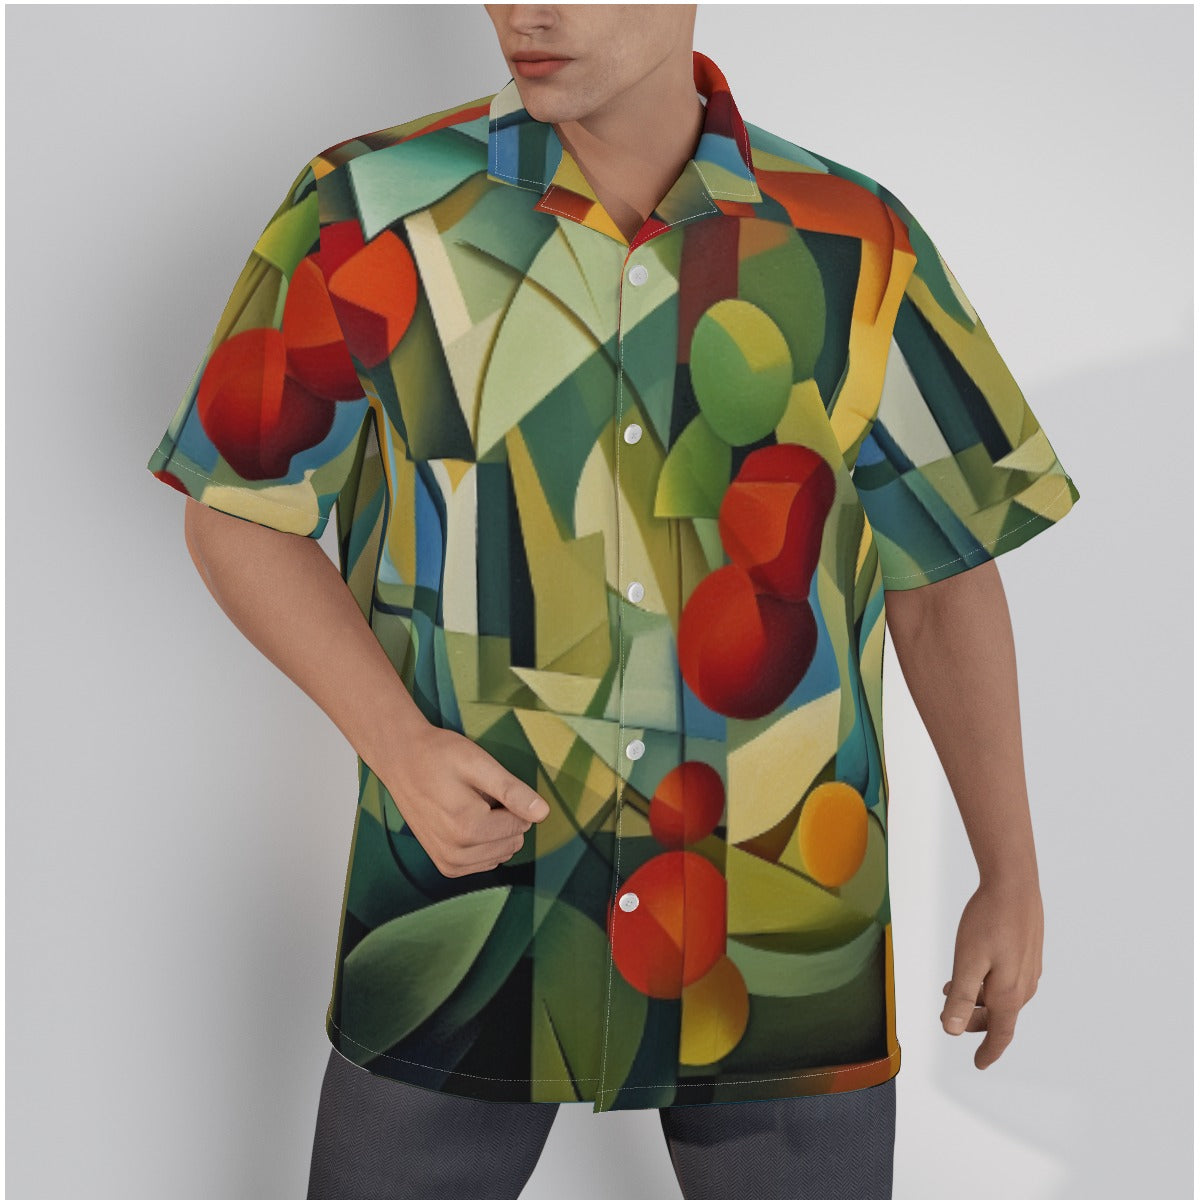 3QYNN All-Over Print Men's Hawaiian Shirt With Button Closure |115GSM Cotton poplin